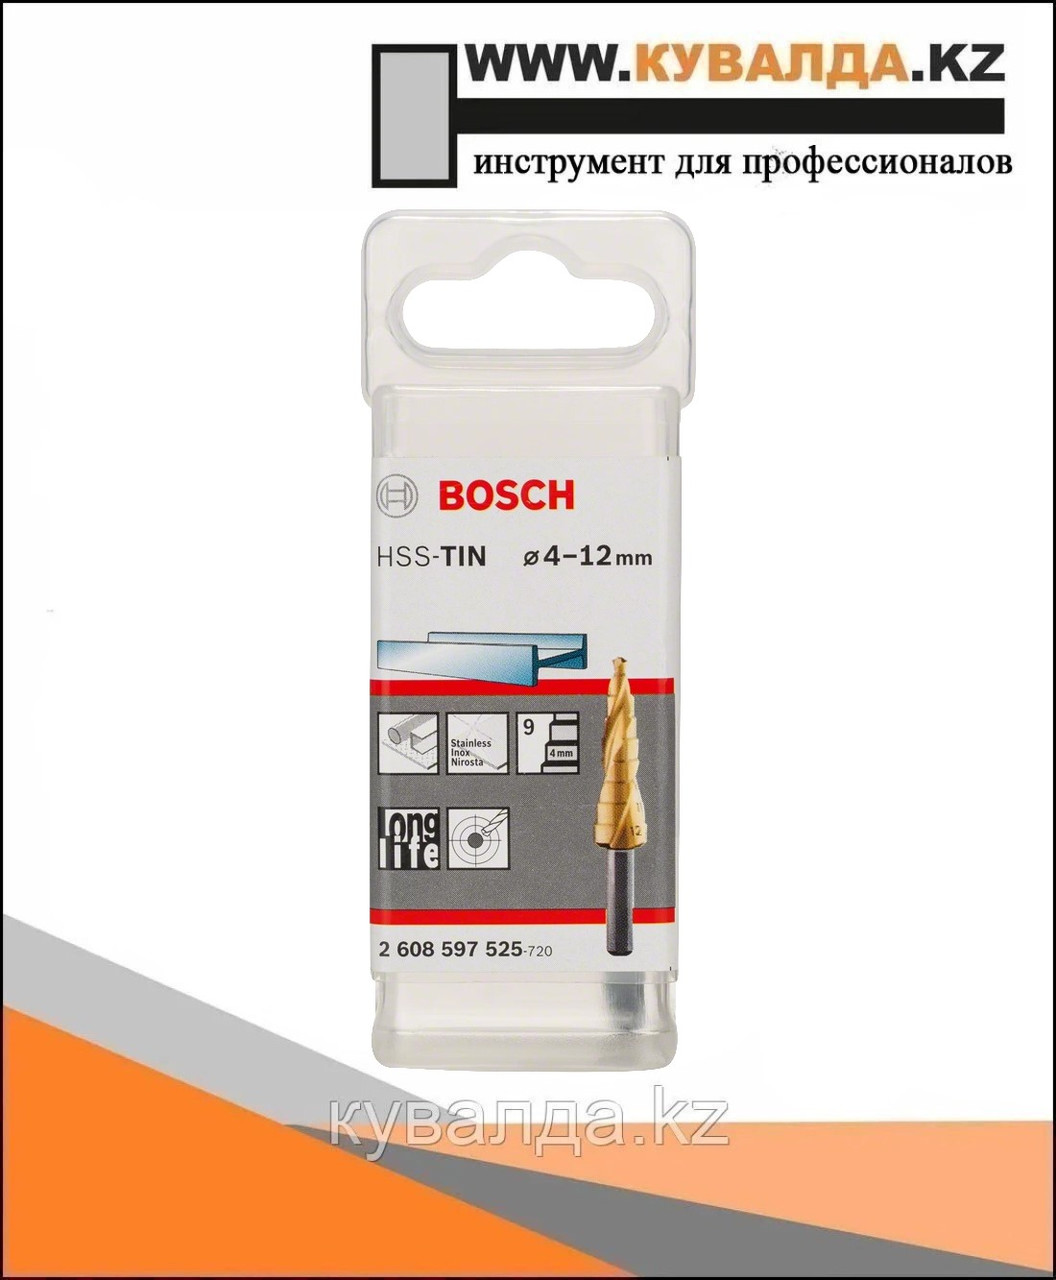 Bosch Ступ сверло HSS-TiN 9 ступ 4-12 мм